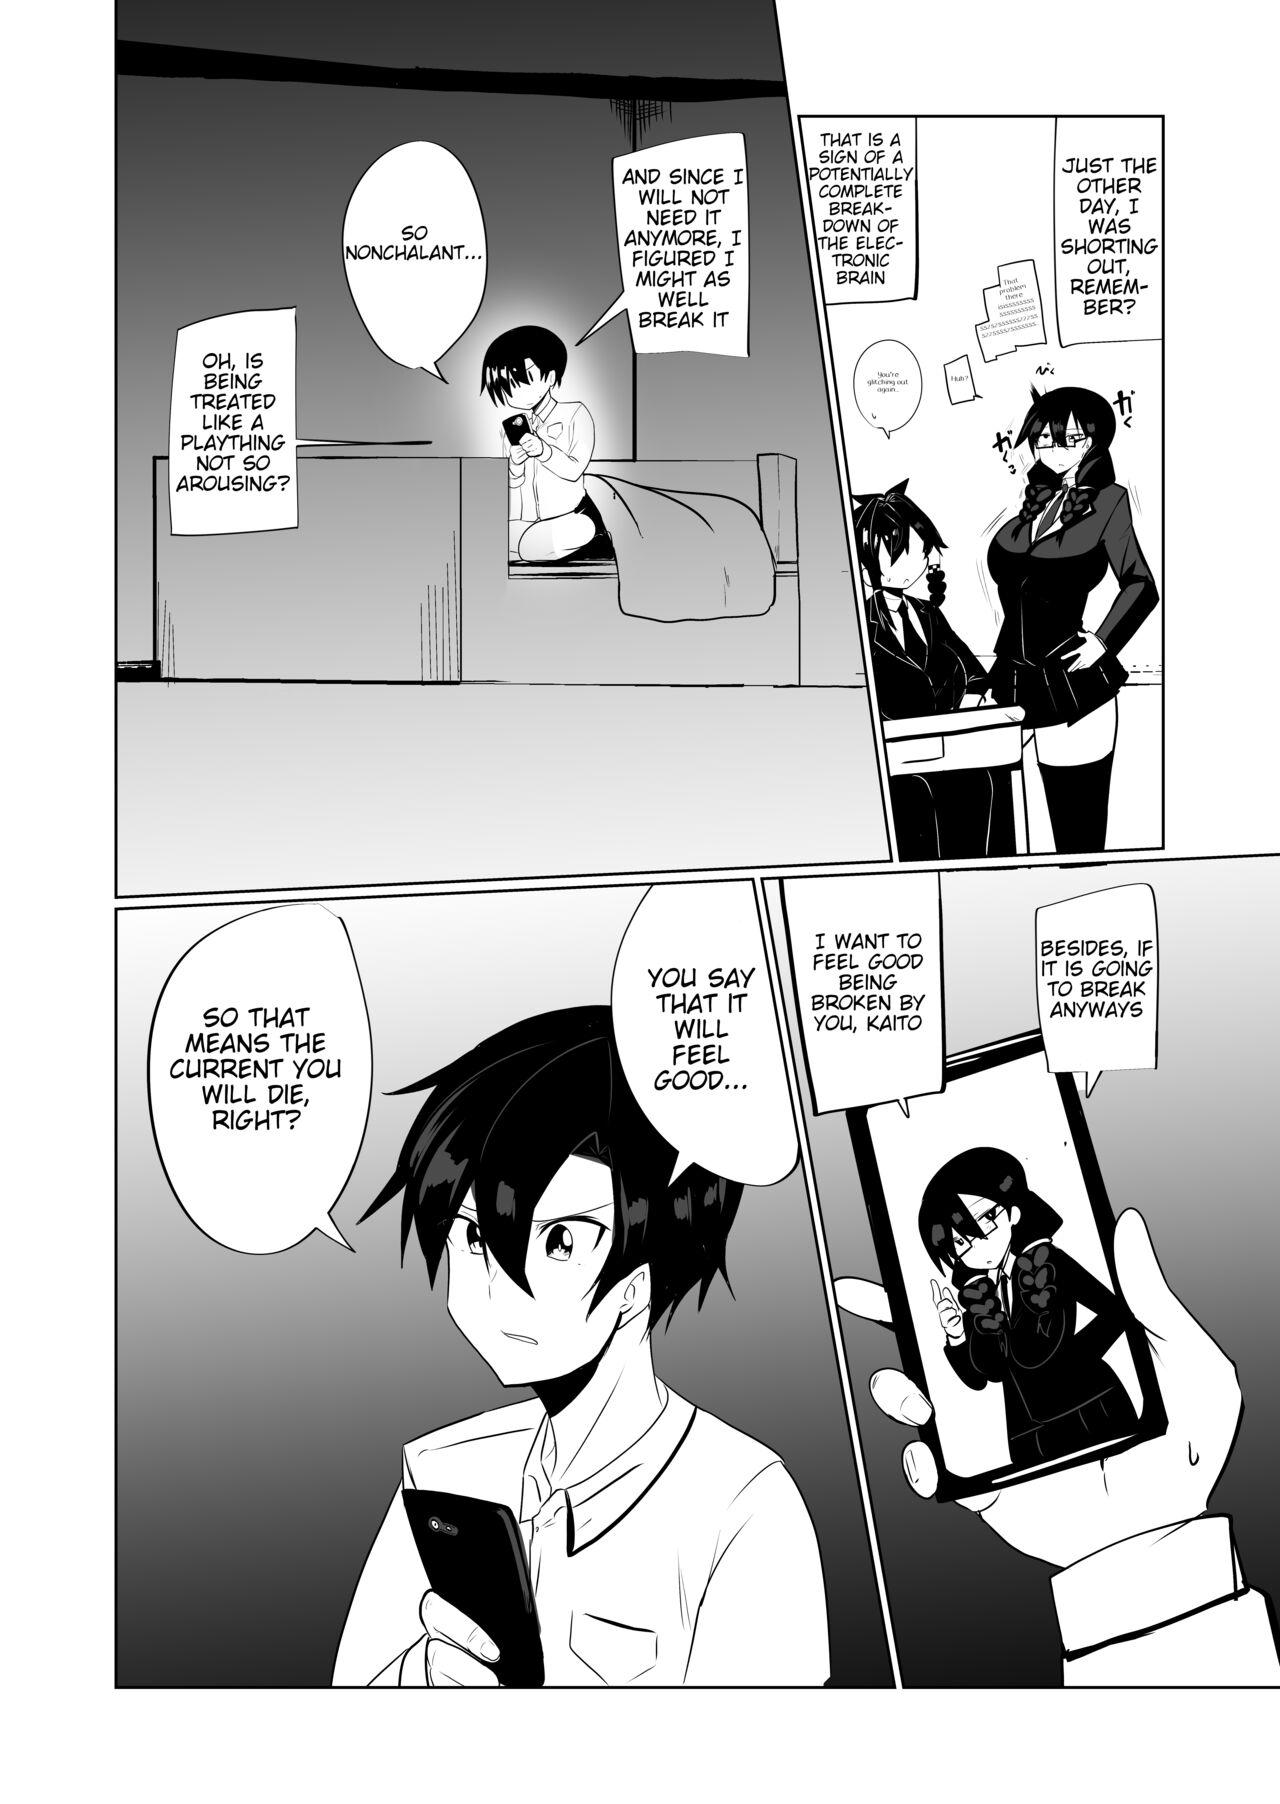 Creamy Android no Osananajimi o Bukkowasu Manga | The Manga about Violently Breaking your Android Childhood Friend - Original Freaky - Page 6